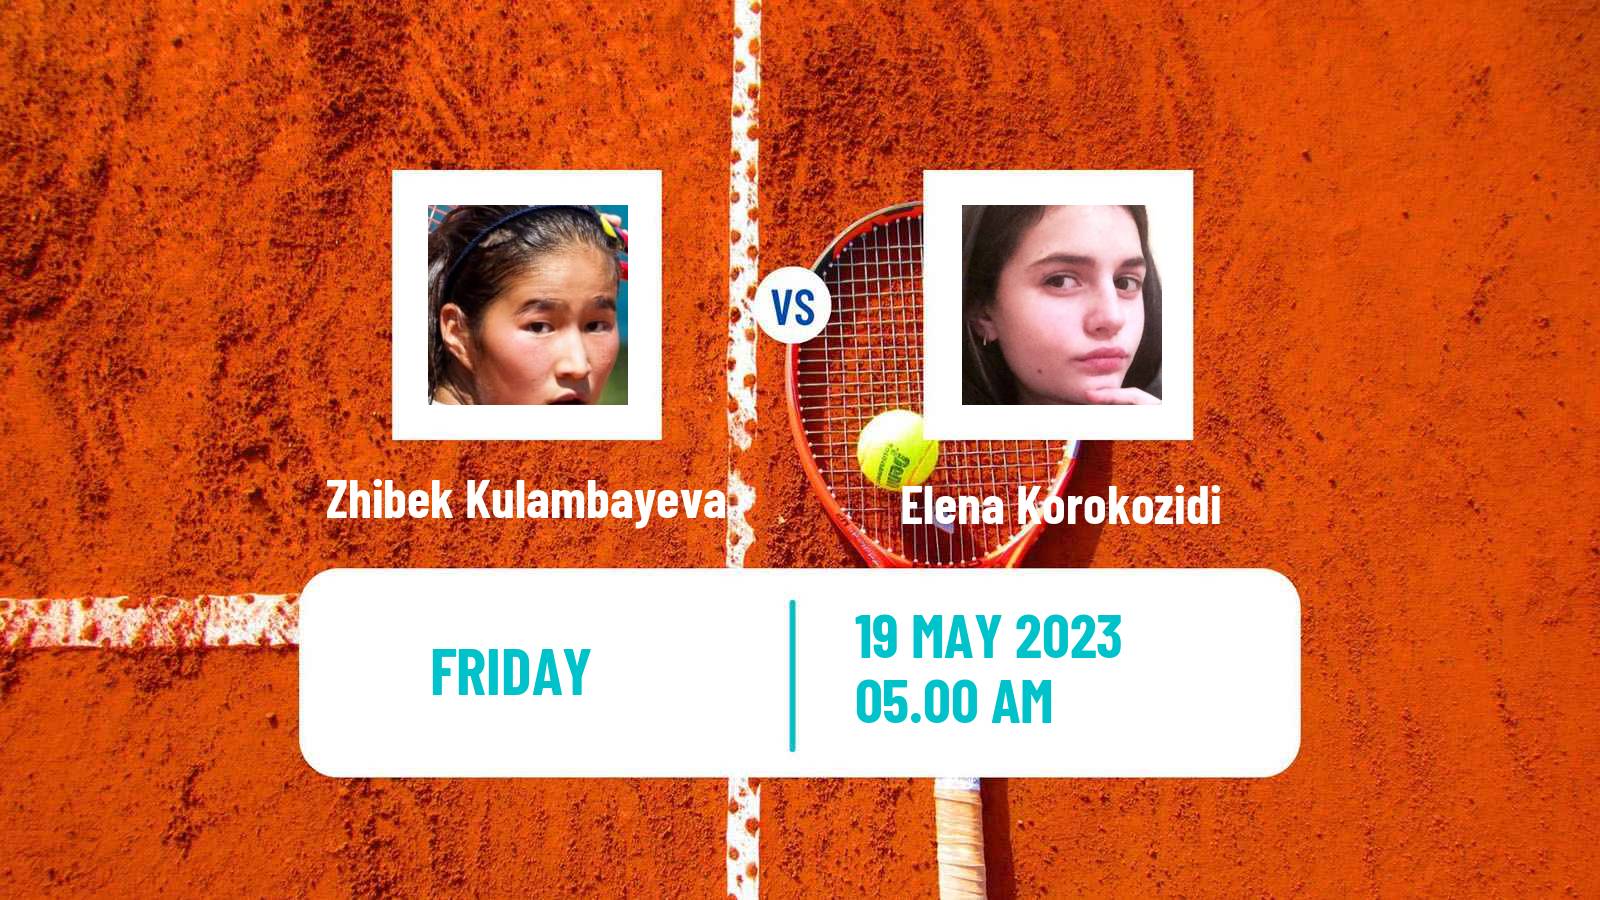 Tennis ITF W25 Kursumlijska Banja Women Zhibek Kulambayeva - Elena Korokozidi